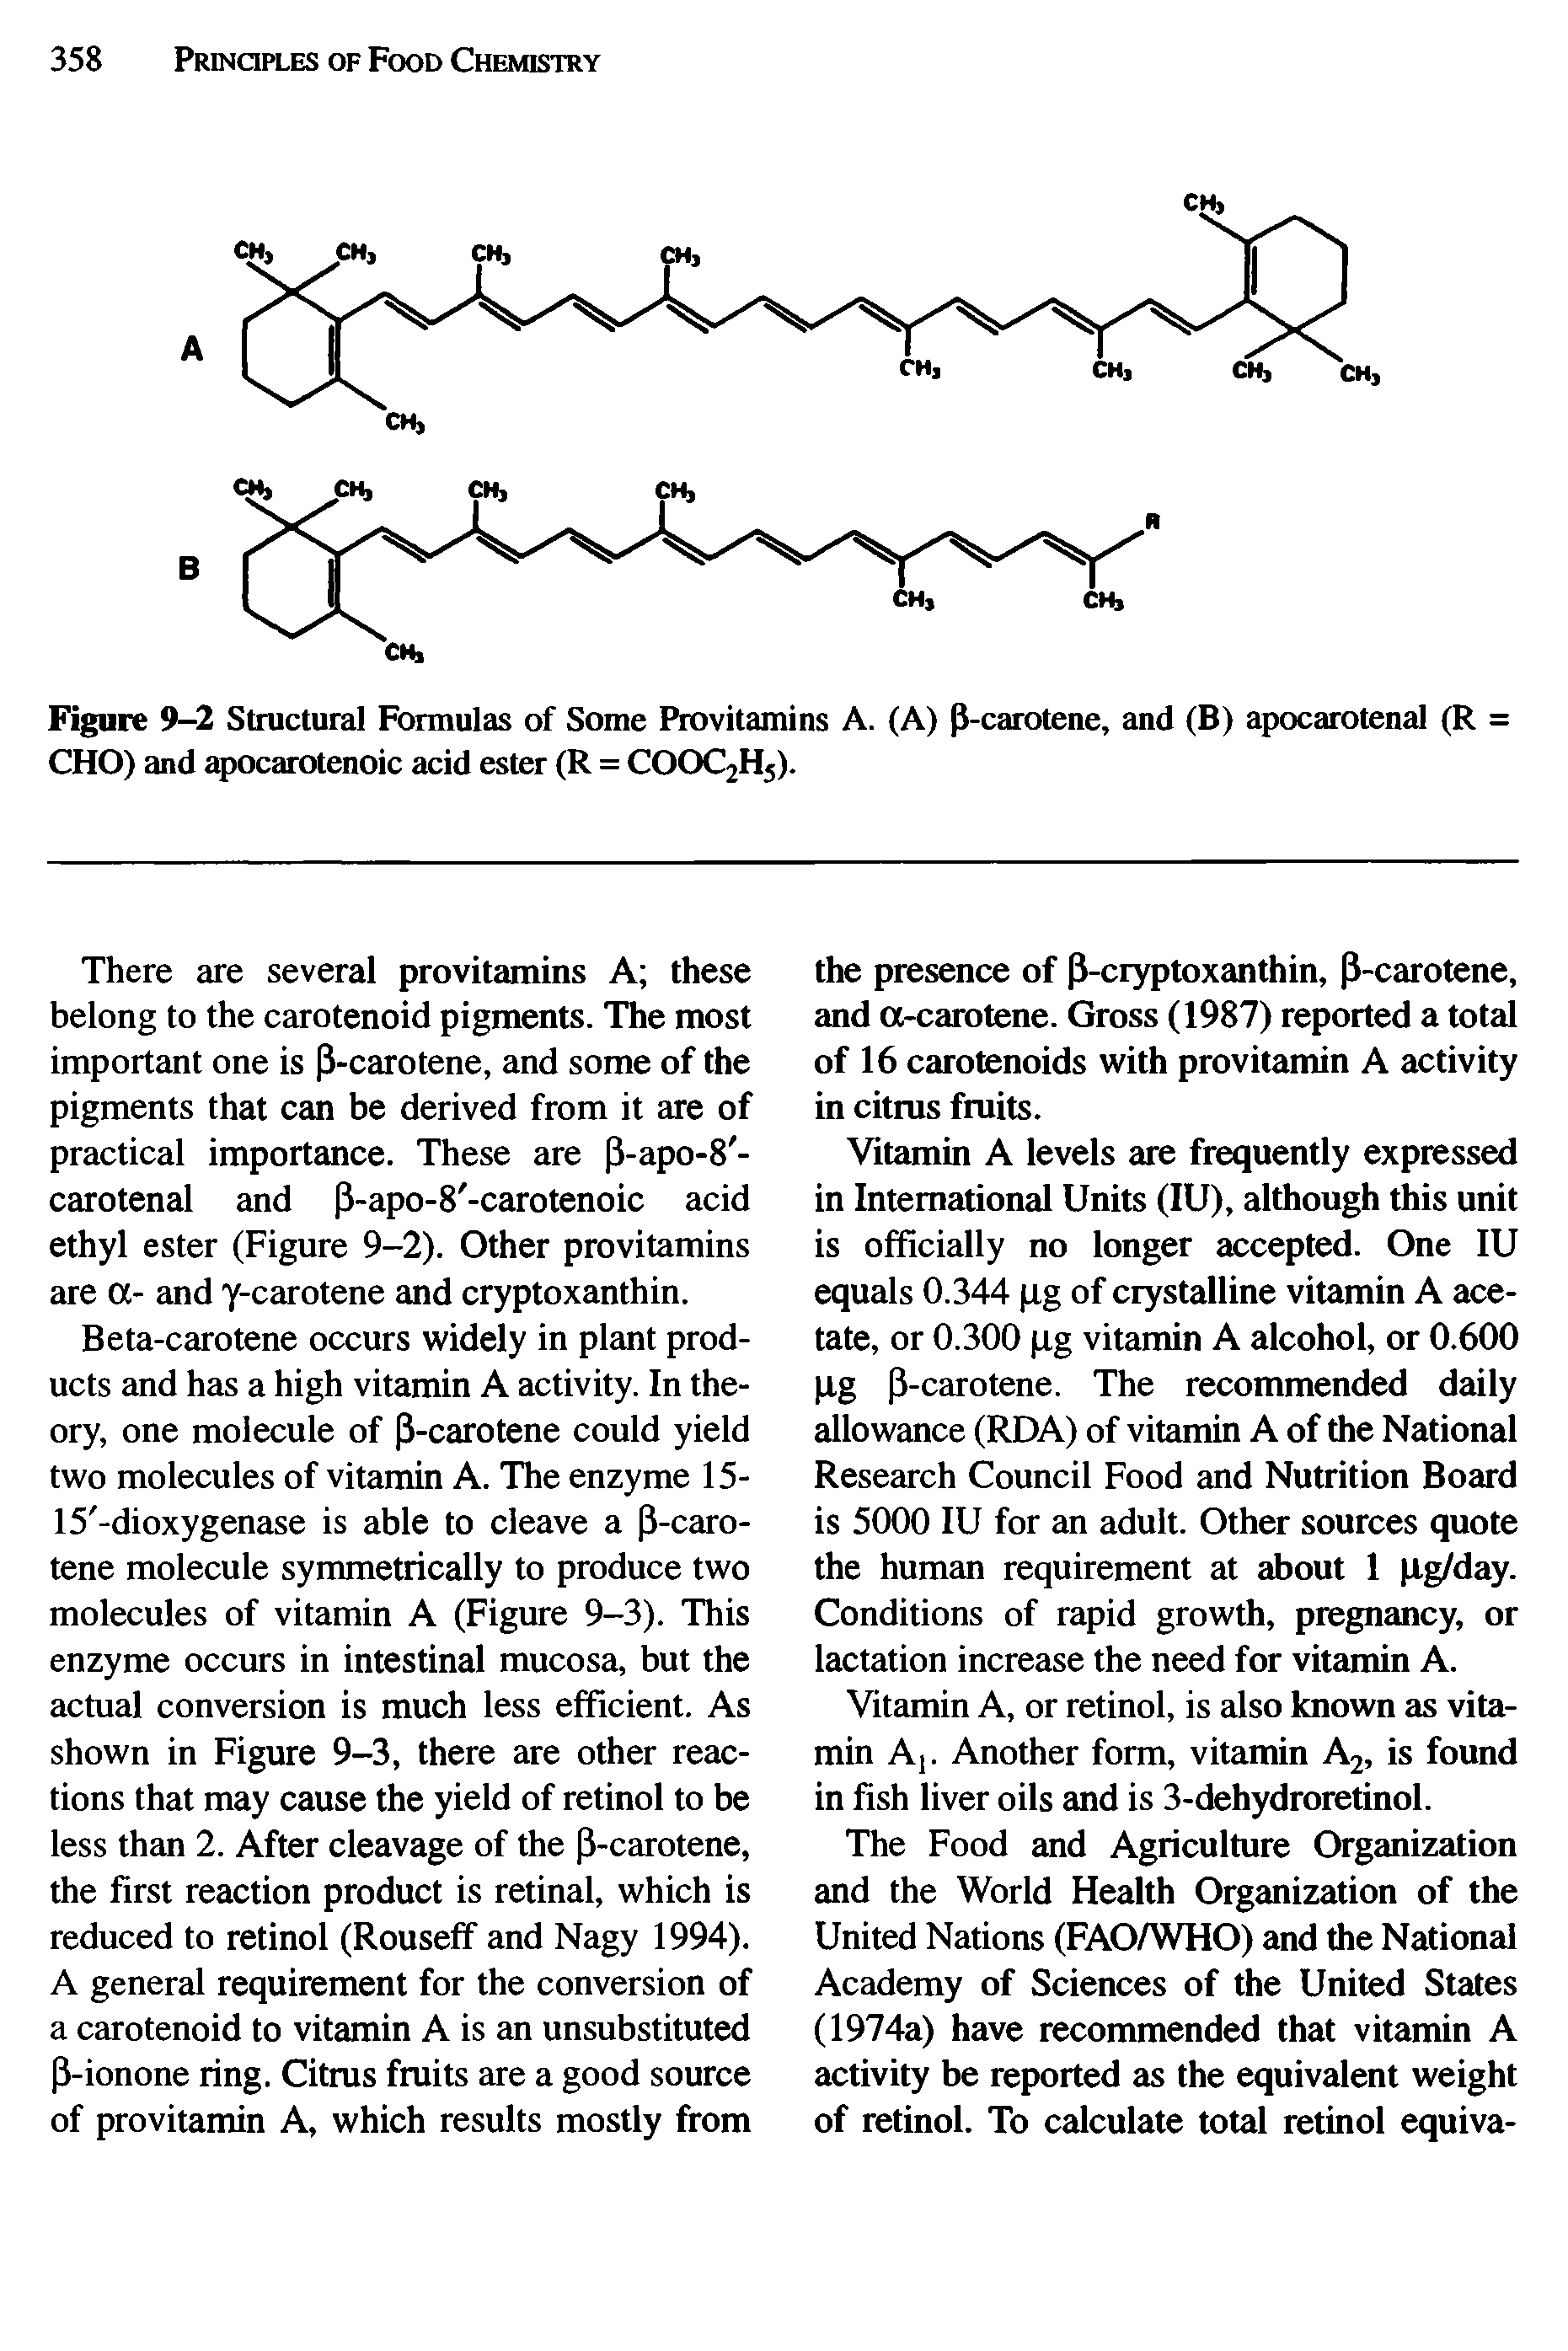 Figure 9-2 Structural Formulas of Some Provitamins A. (A) P-carotene, and (B) apocarotenal (R = CHO) and apocarotenoic acid ester (R = COOC2H5).